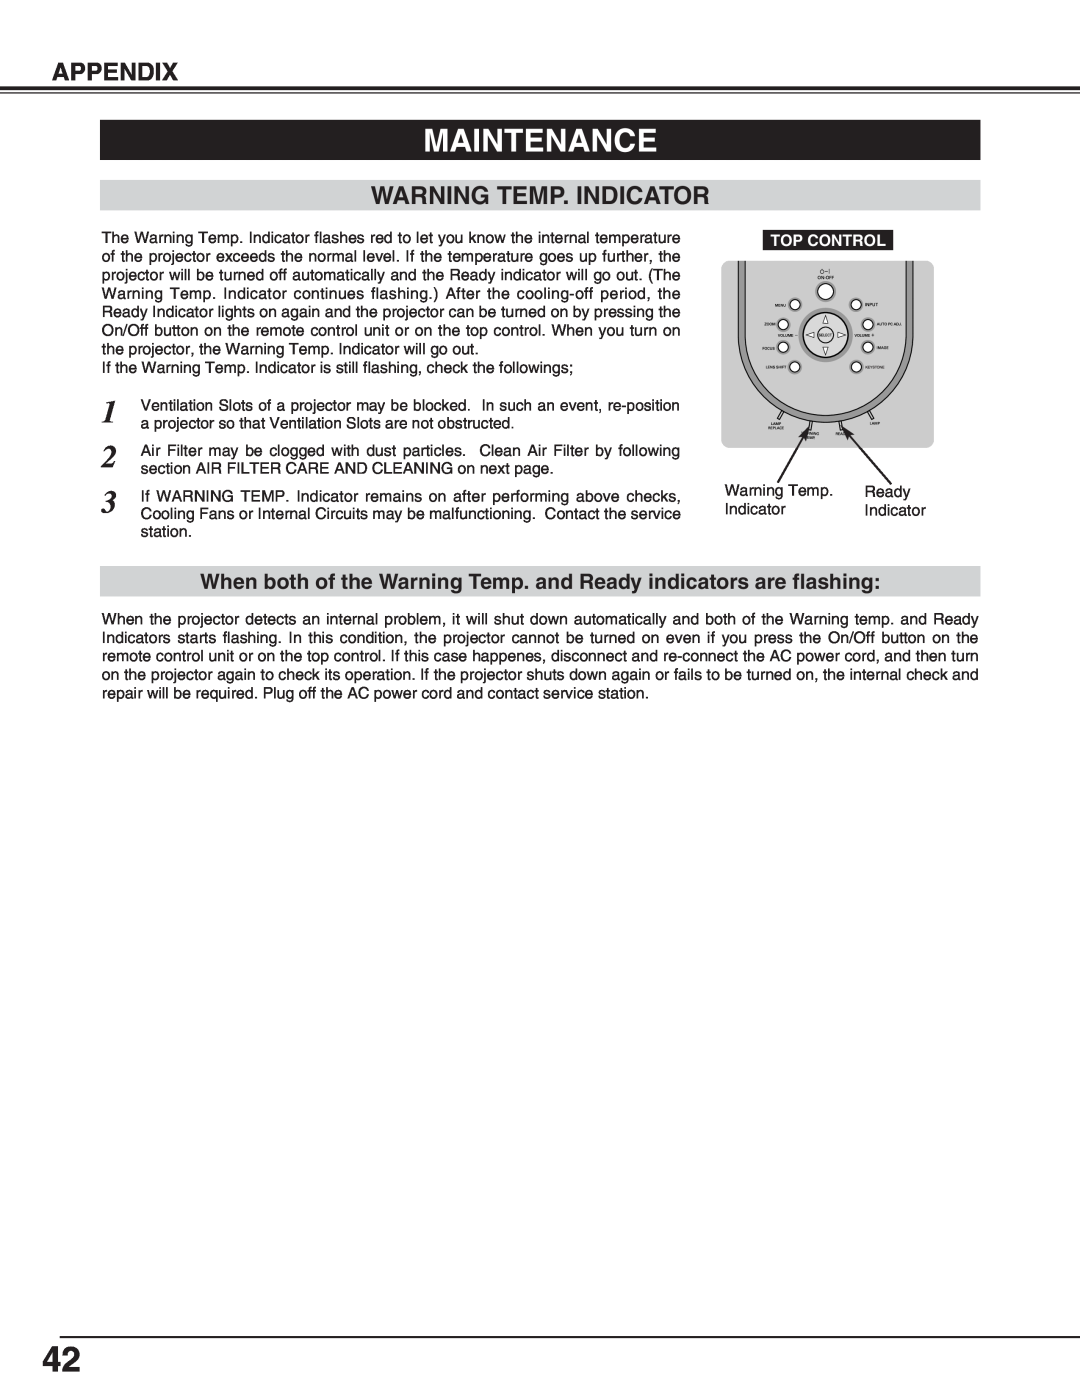 Eiki LC-X70 instruction manual Maintenance, Appendix, Warning Temp. Indicator 